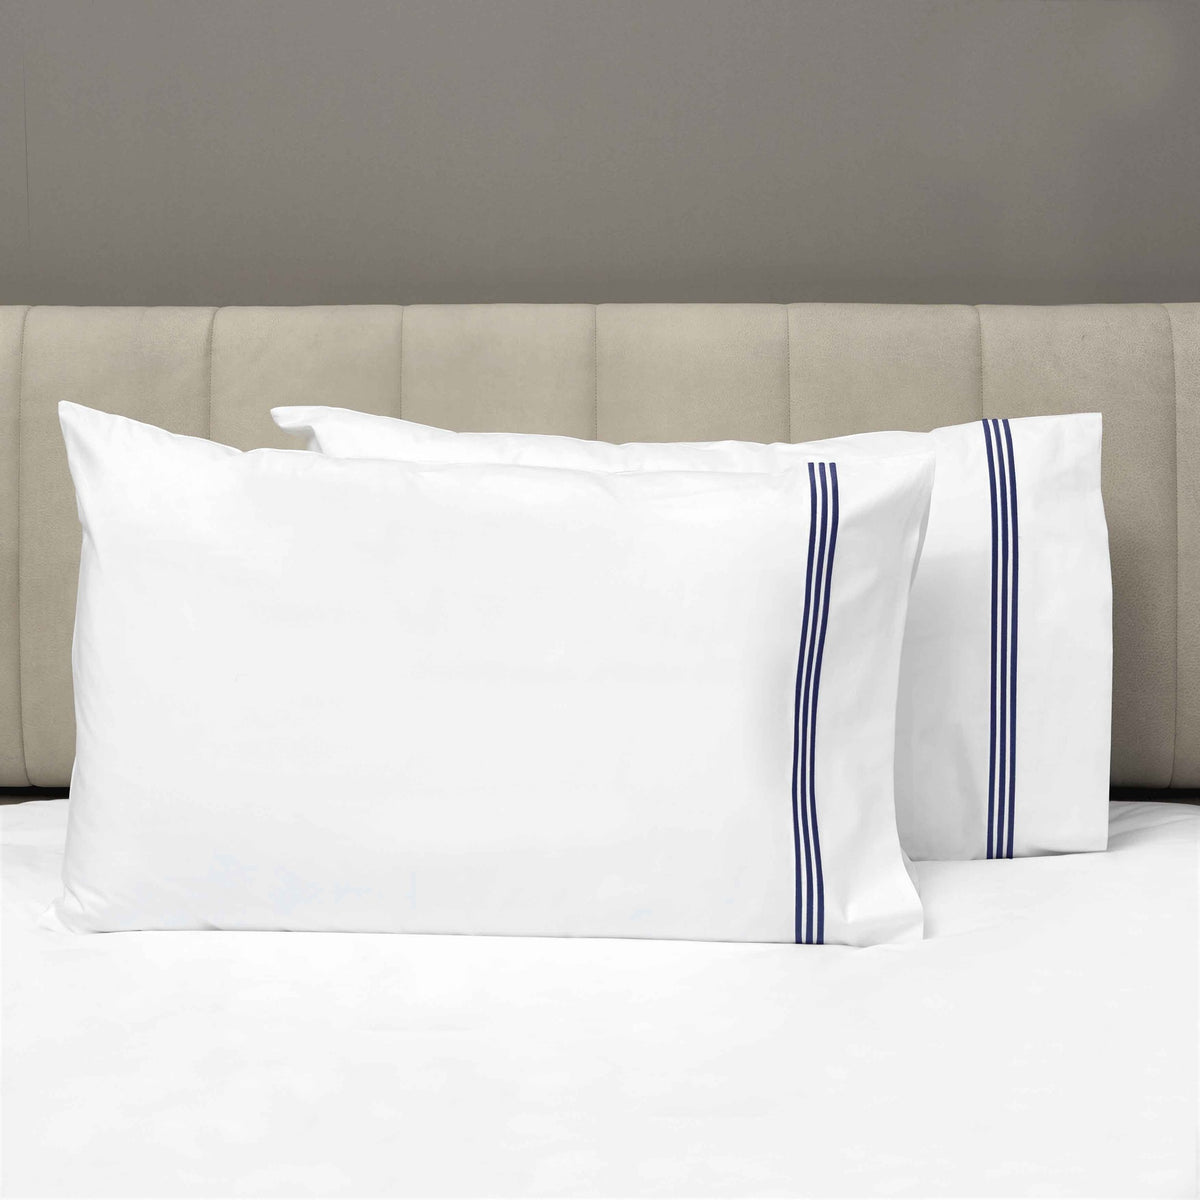 Pair of Pillowcases of Signoria Platinum Percale Bedding in White/Midnight Blue Color